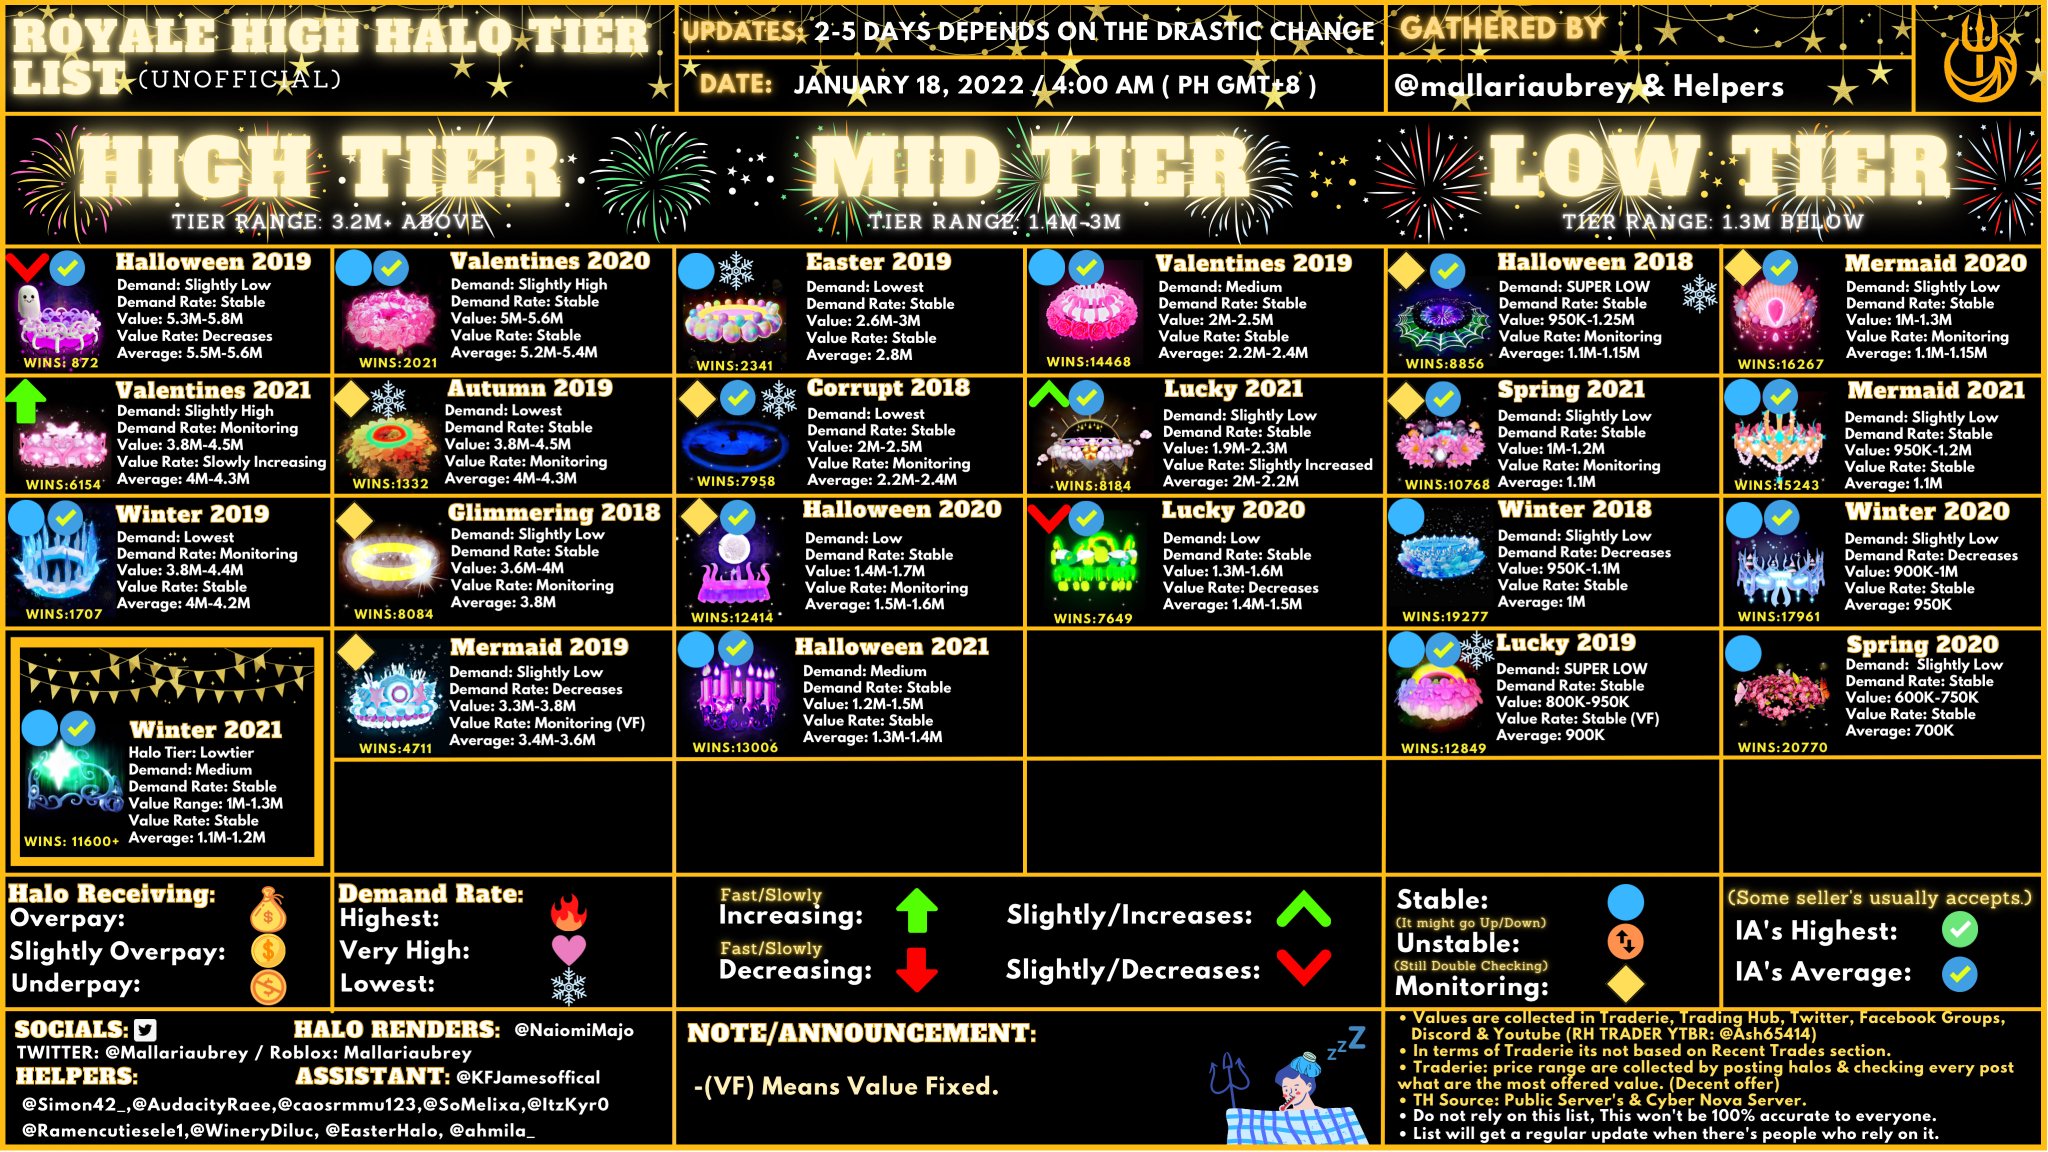 Royale High: Mal's Halo Tier List (January 2023) - GamesRoid - Medium